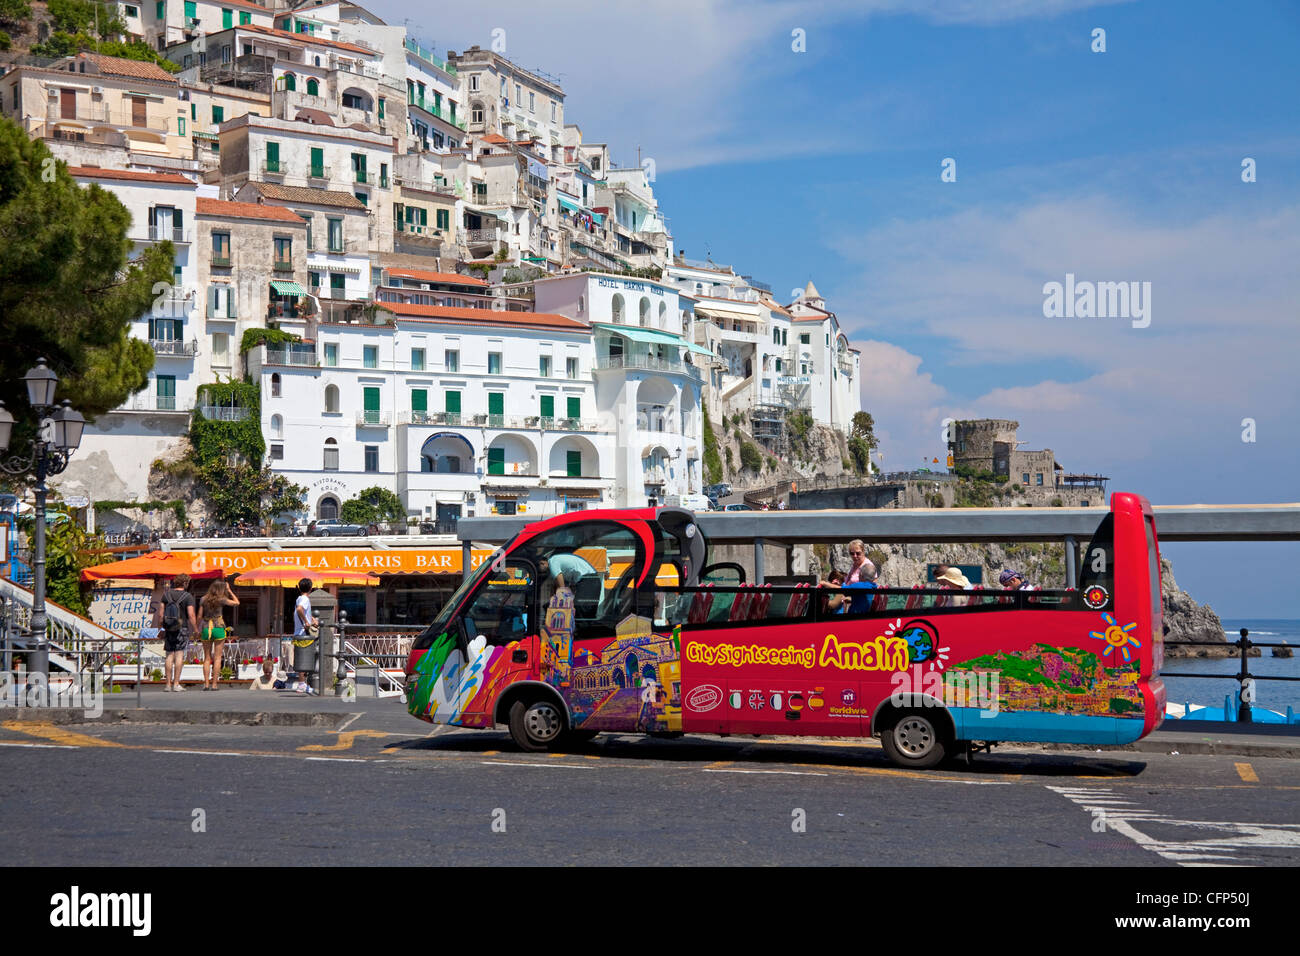 Sightseeing with a tourist bus, Amalfi, Amalfi coast, Unesco World Heritage site, Campania, Italy, Mediterranean sea, Europe Stock Photo